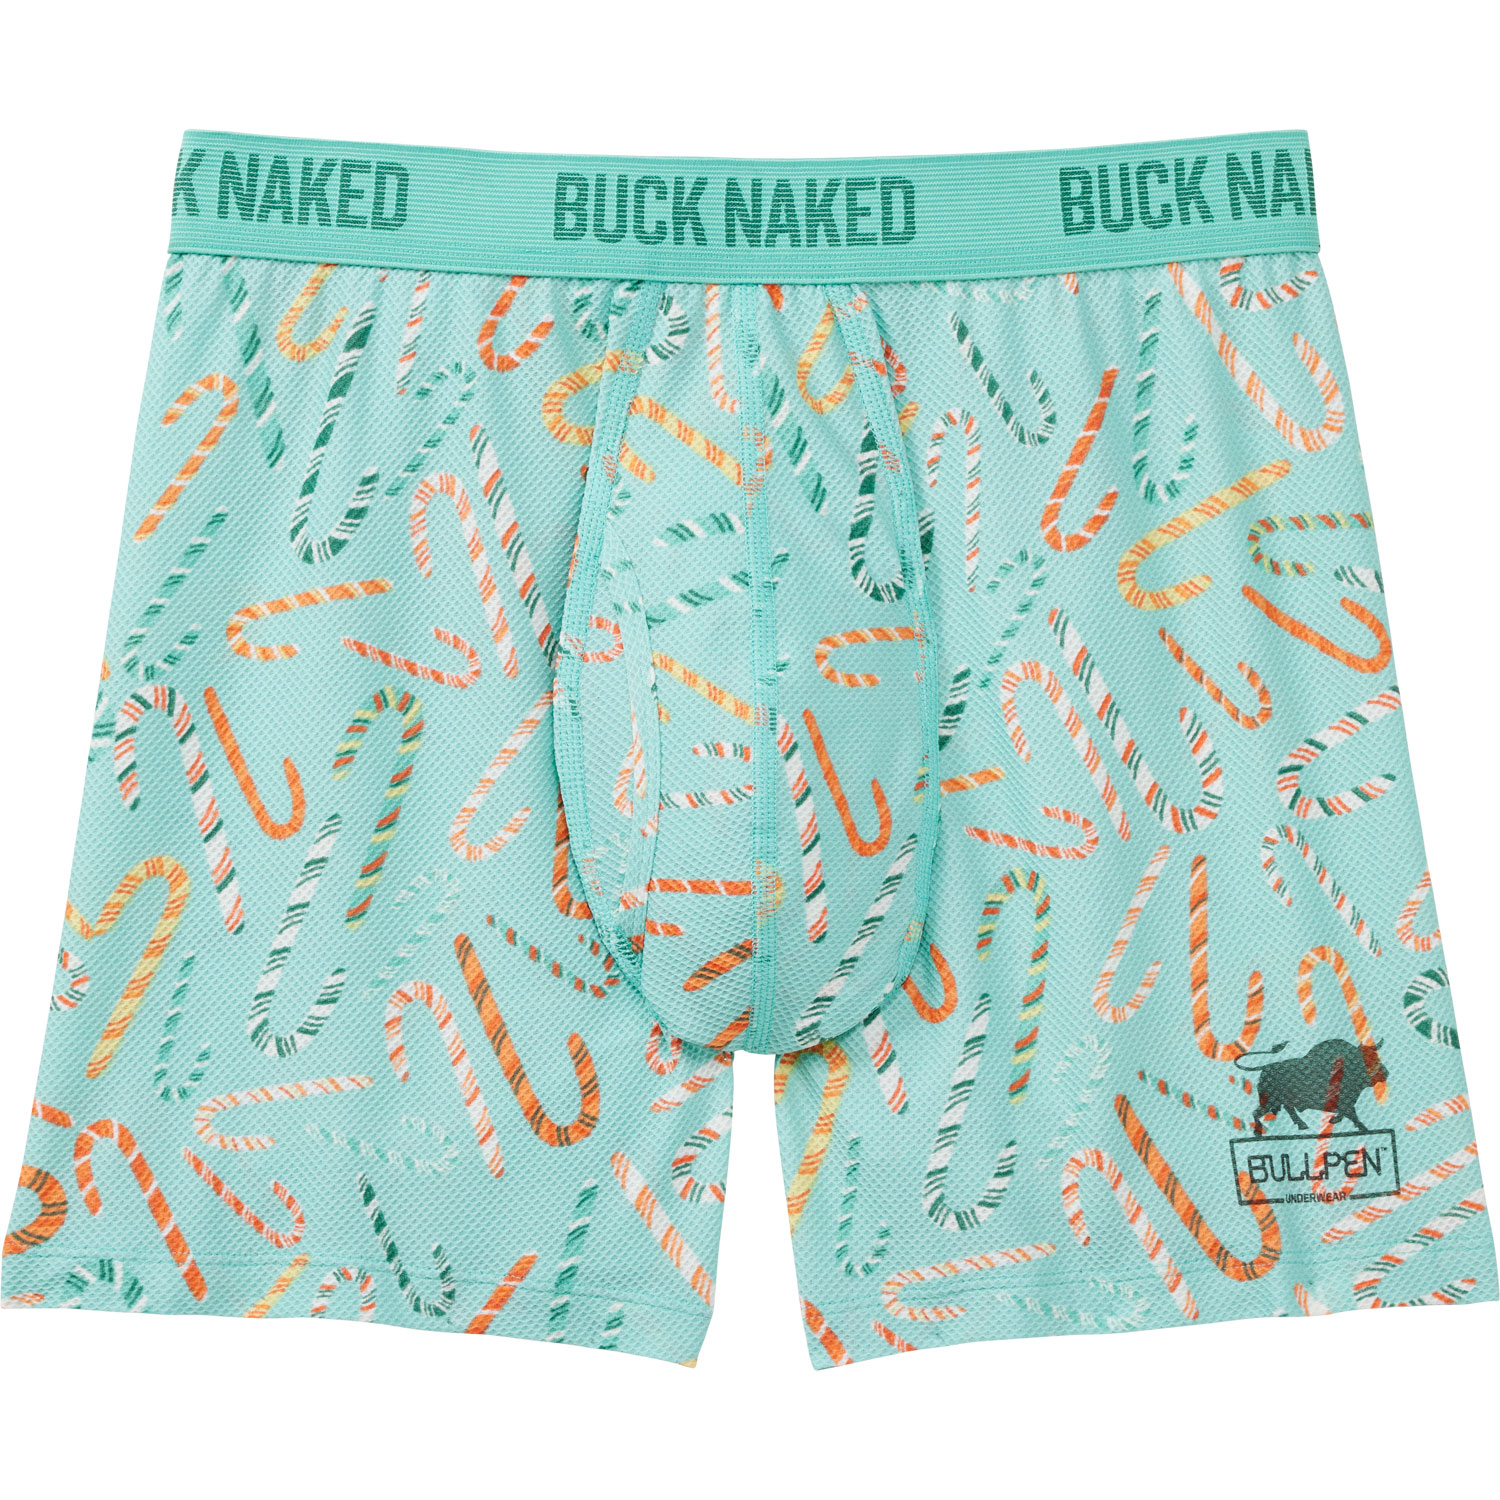 Women's Buck Naked Briefs 3-Pack Gift Set